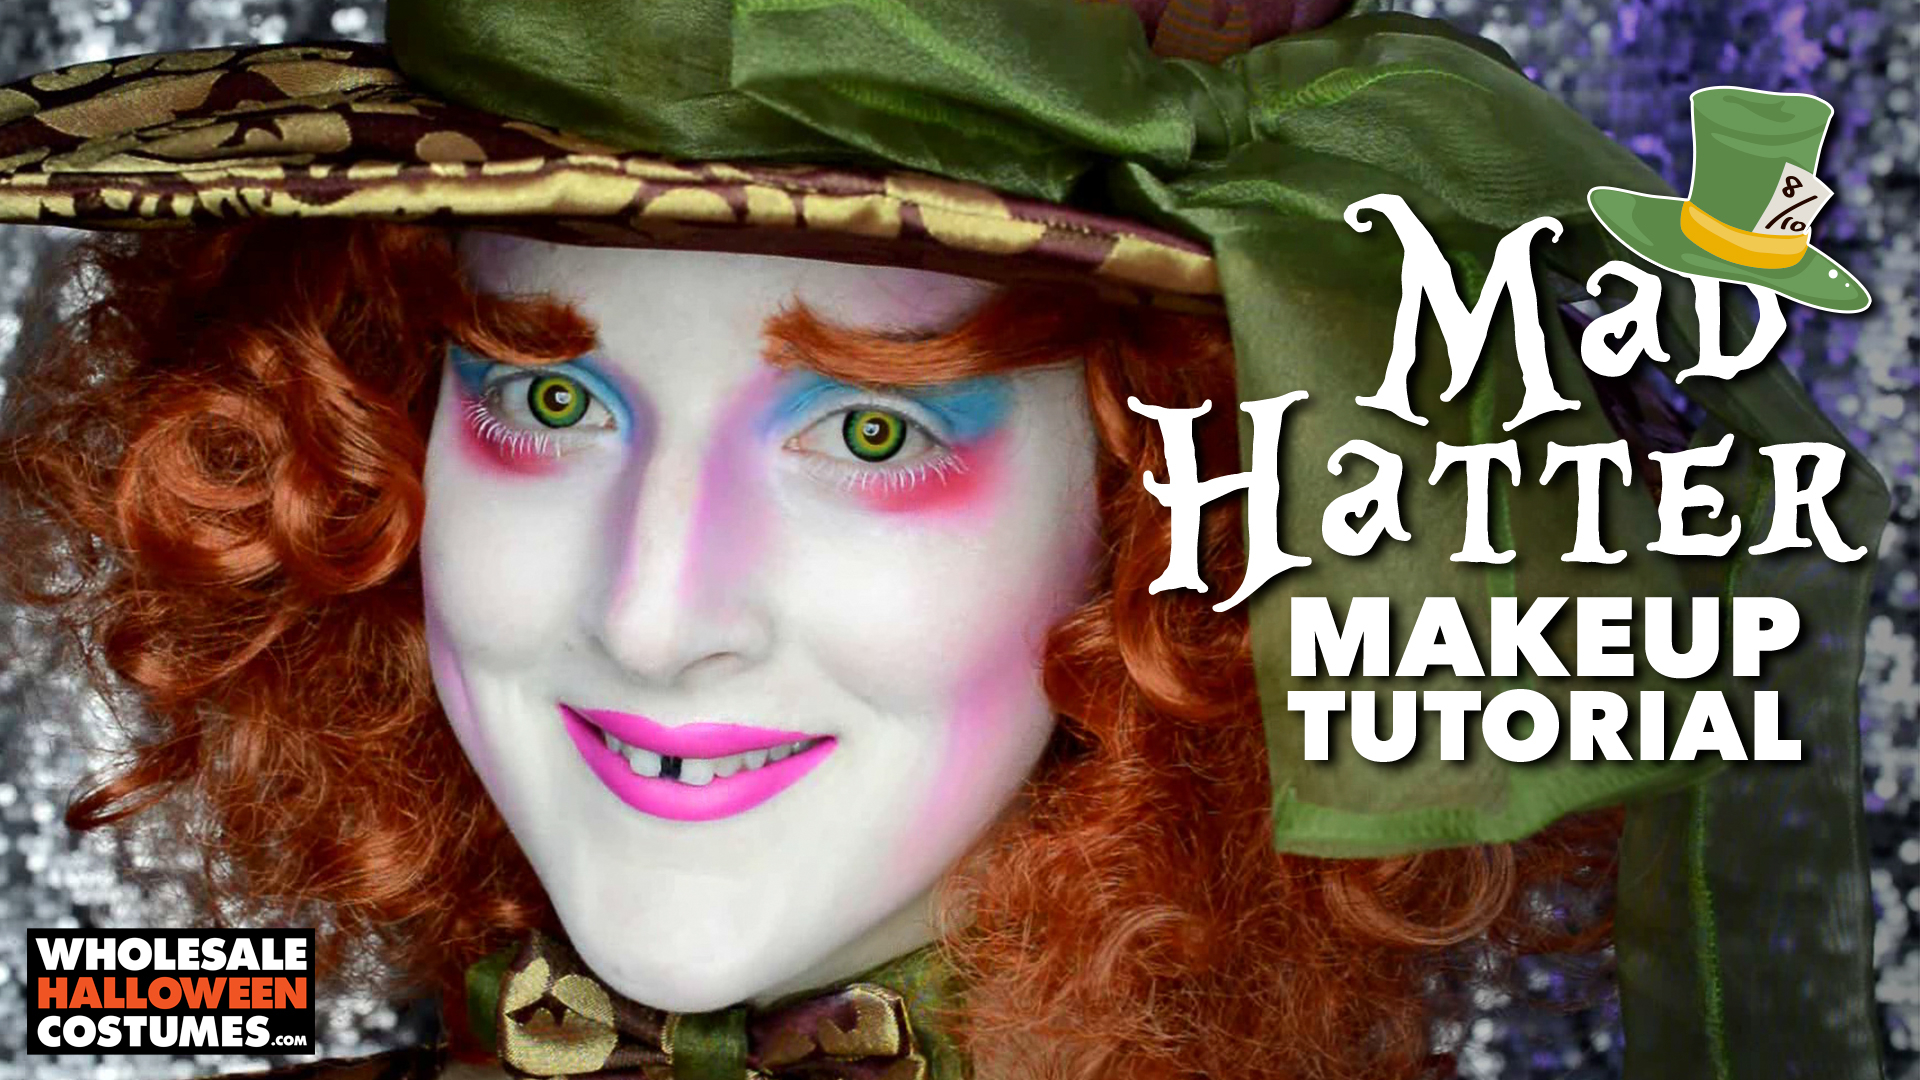 Mad Hatter Eye Makeup Mad Hatter Makeup Tutorial Wholesale Halloween Costumes Blog